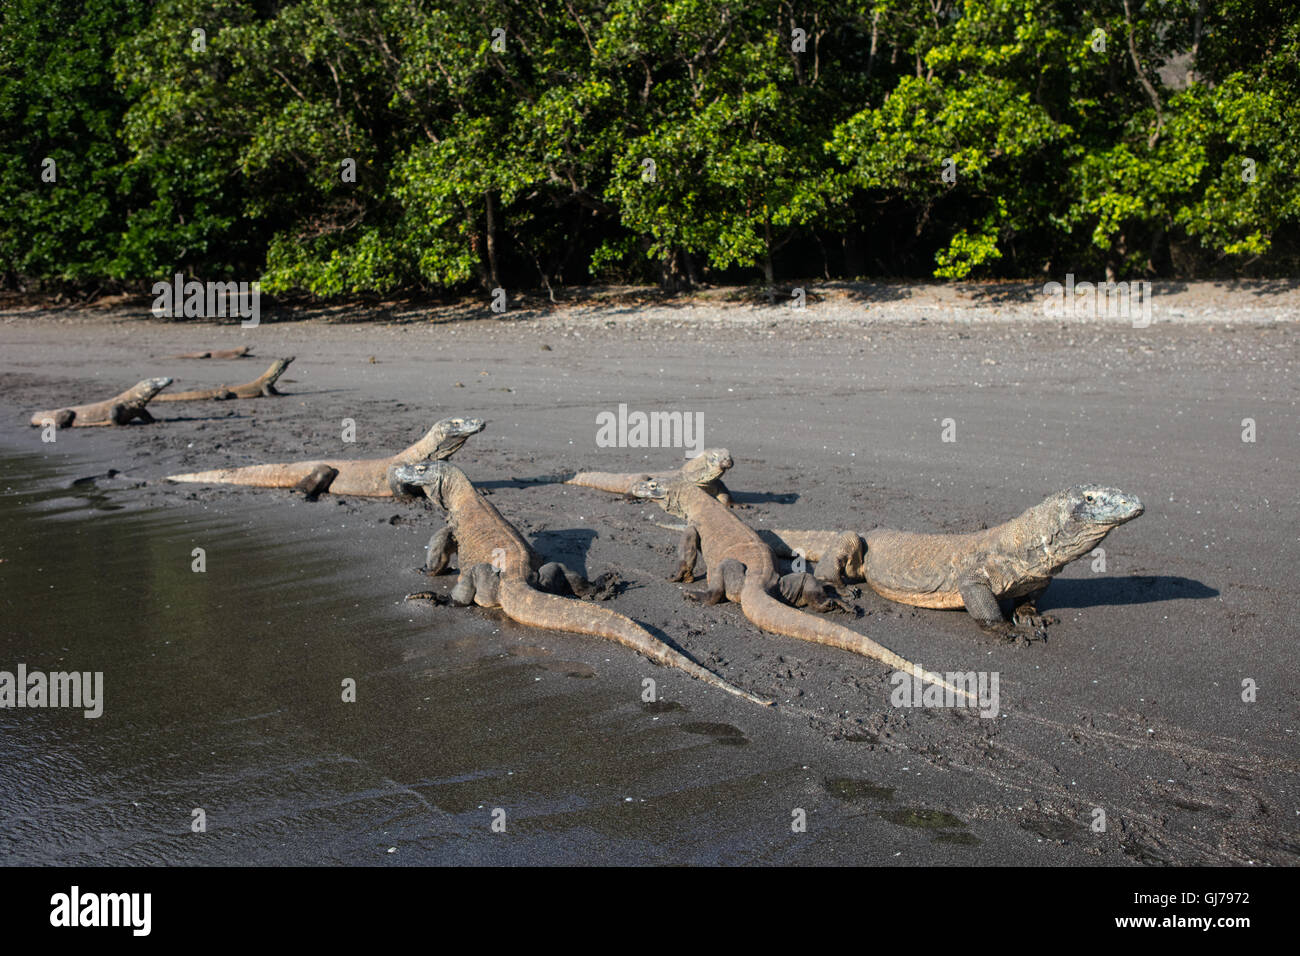 Komodo dragons (Varanus komodoensis) patrol a sand beach in Komodo National Park, Indonesia. These large lizards are dangerous. Stock Photo